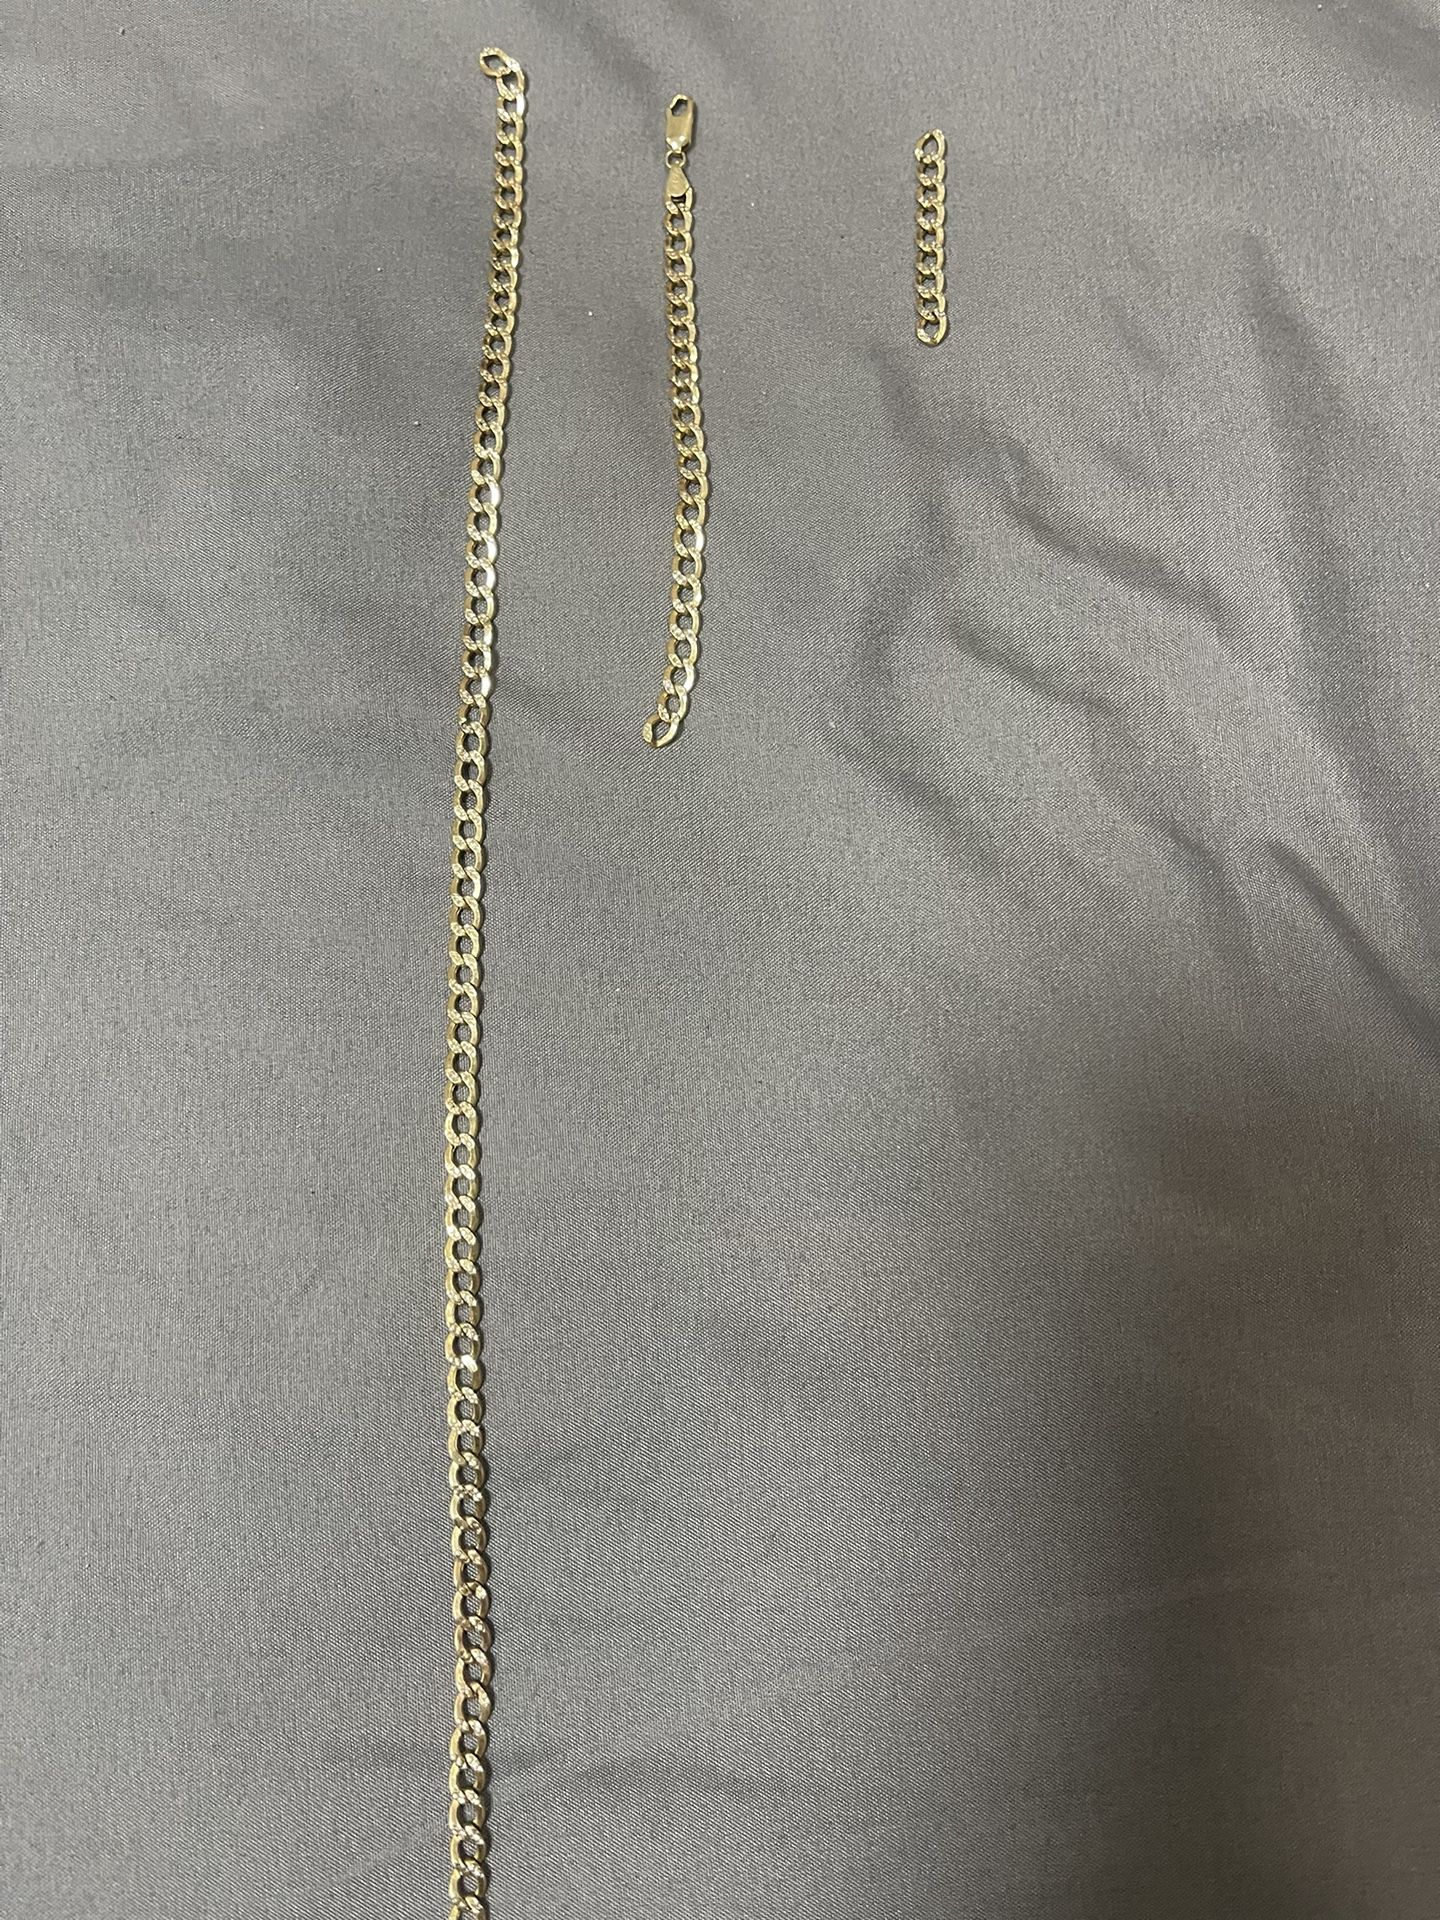 10k Gold Chain (broken Into 3 Pieces) 